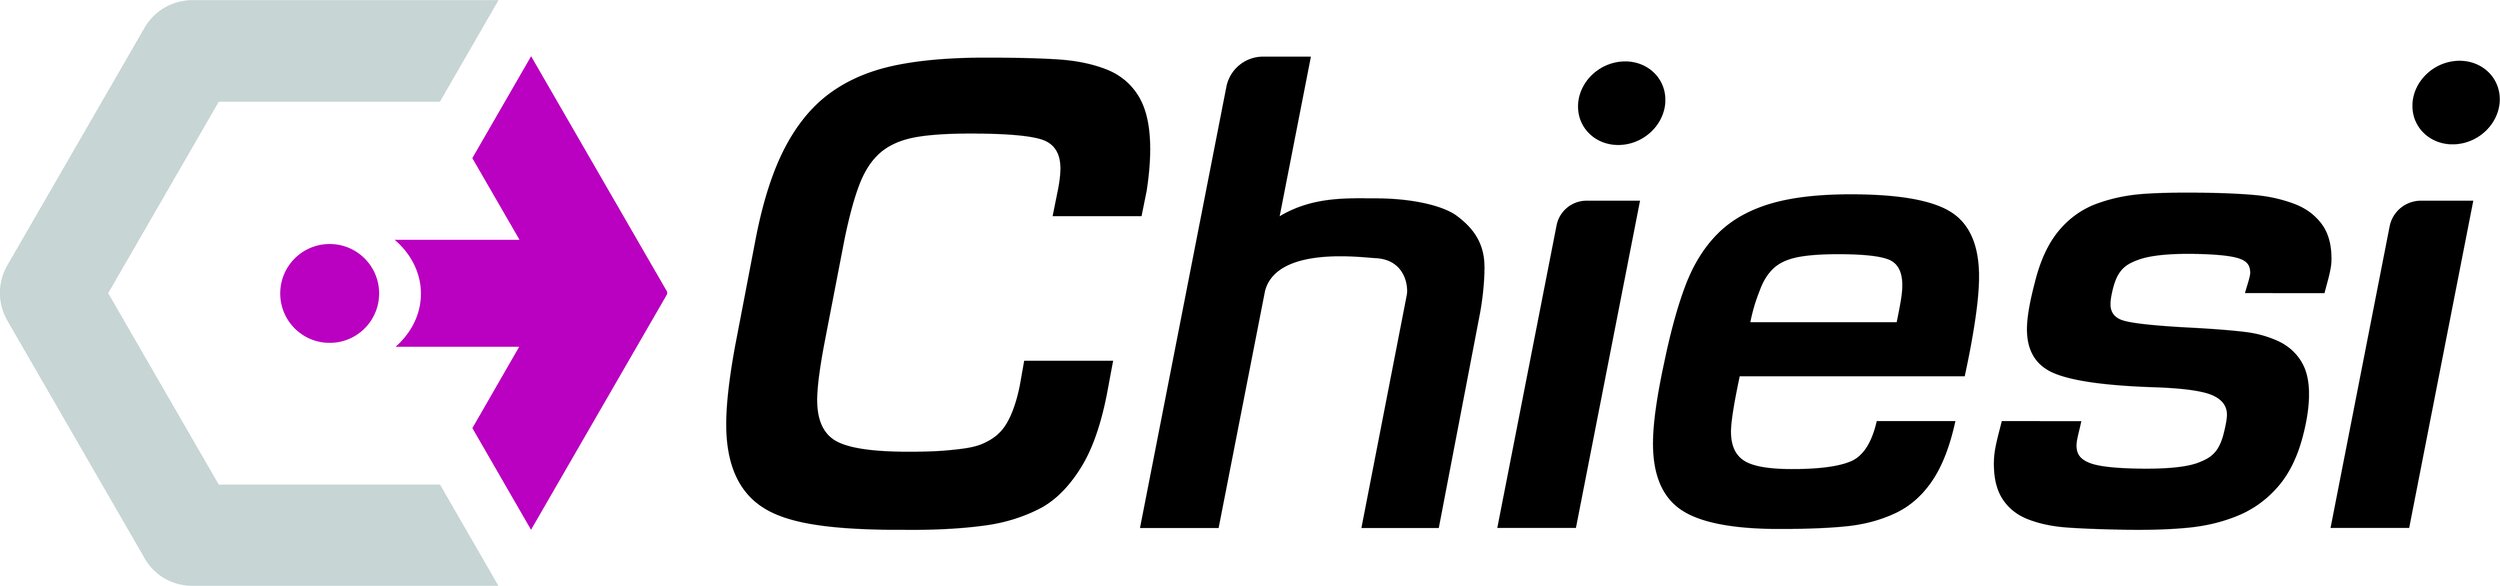 Chiesi Logo - 1.Primary.jpg